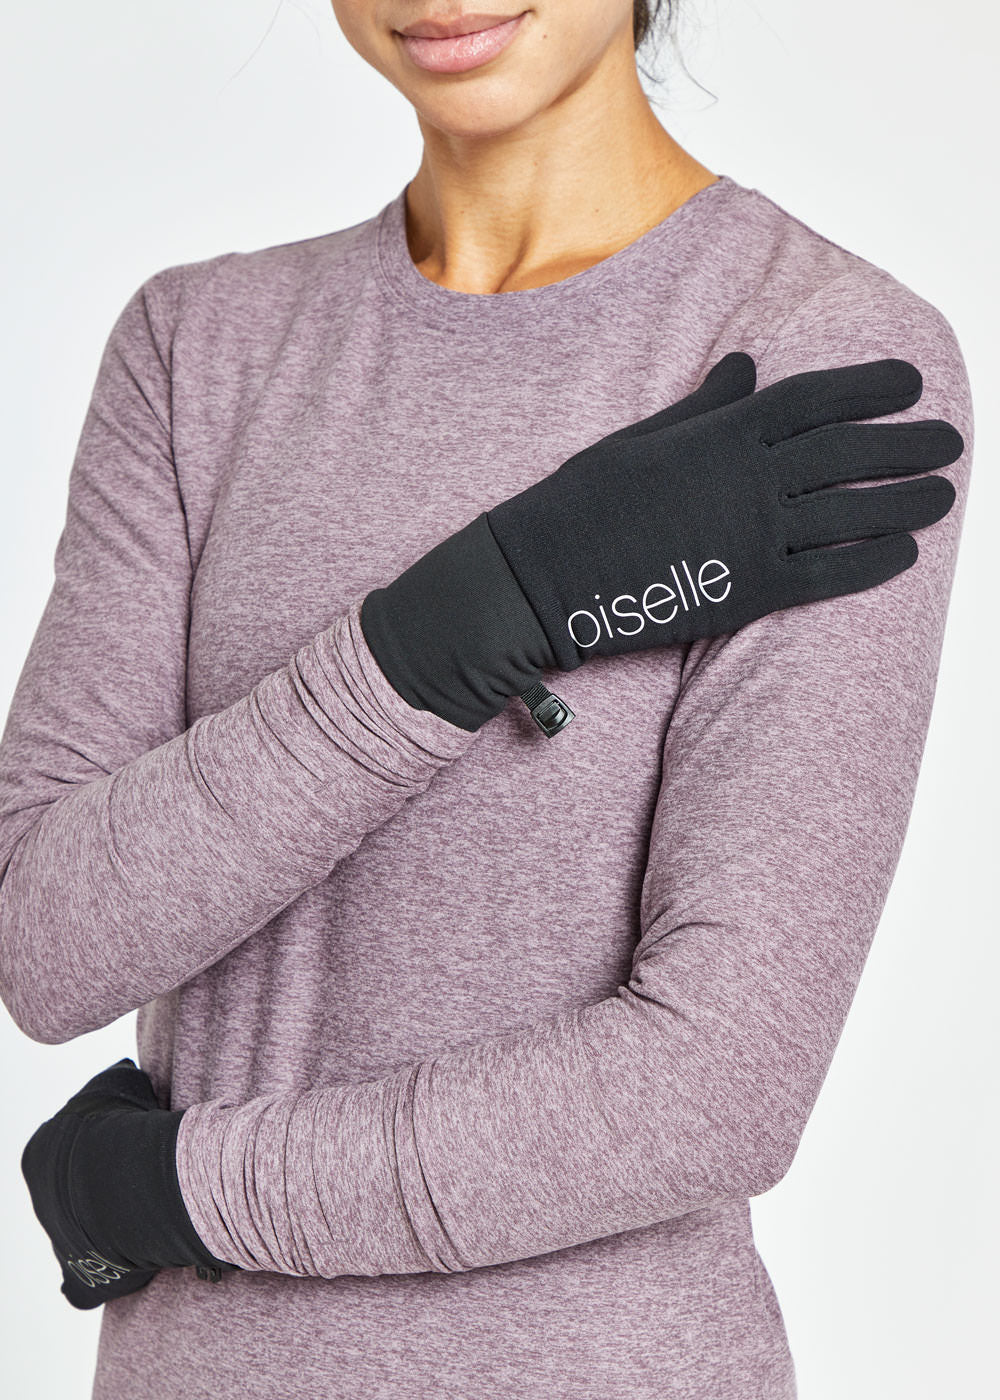 OISELLE Power Move Gloves –